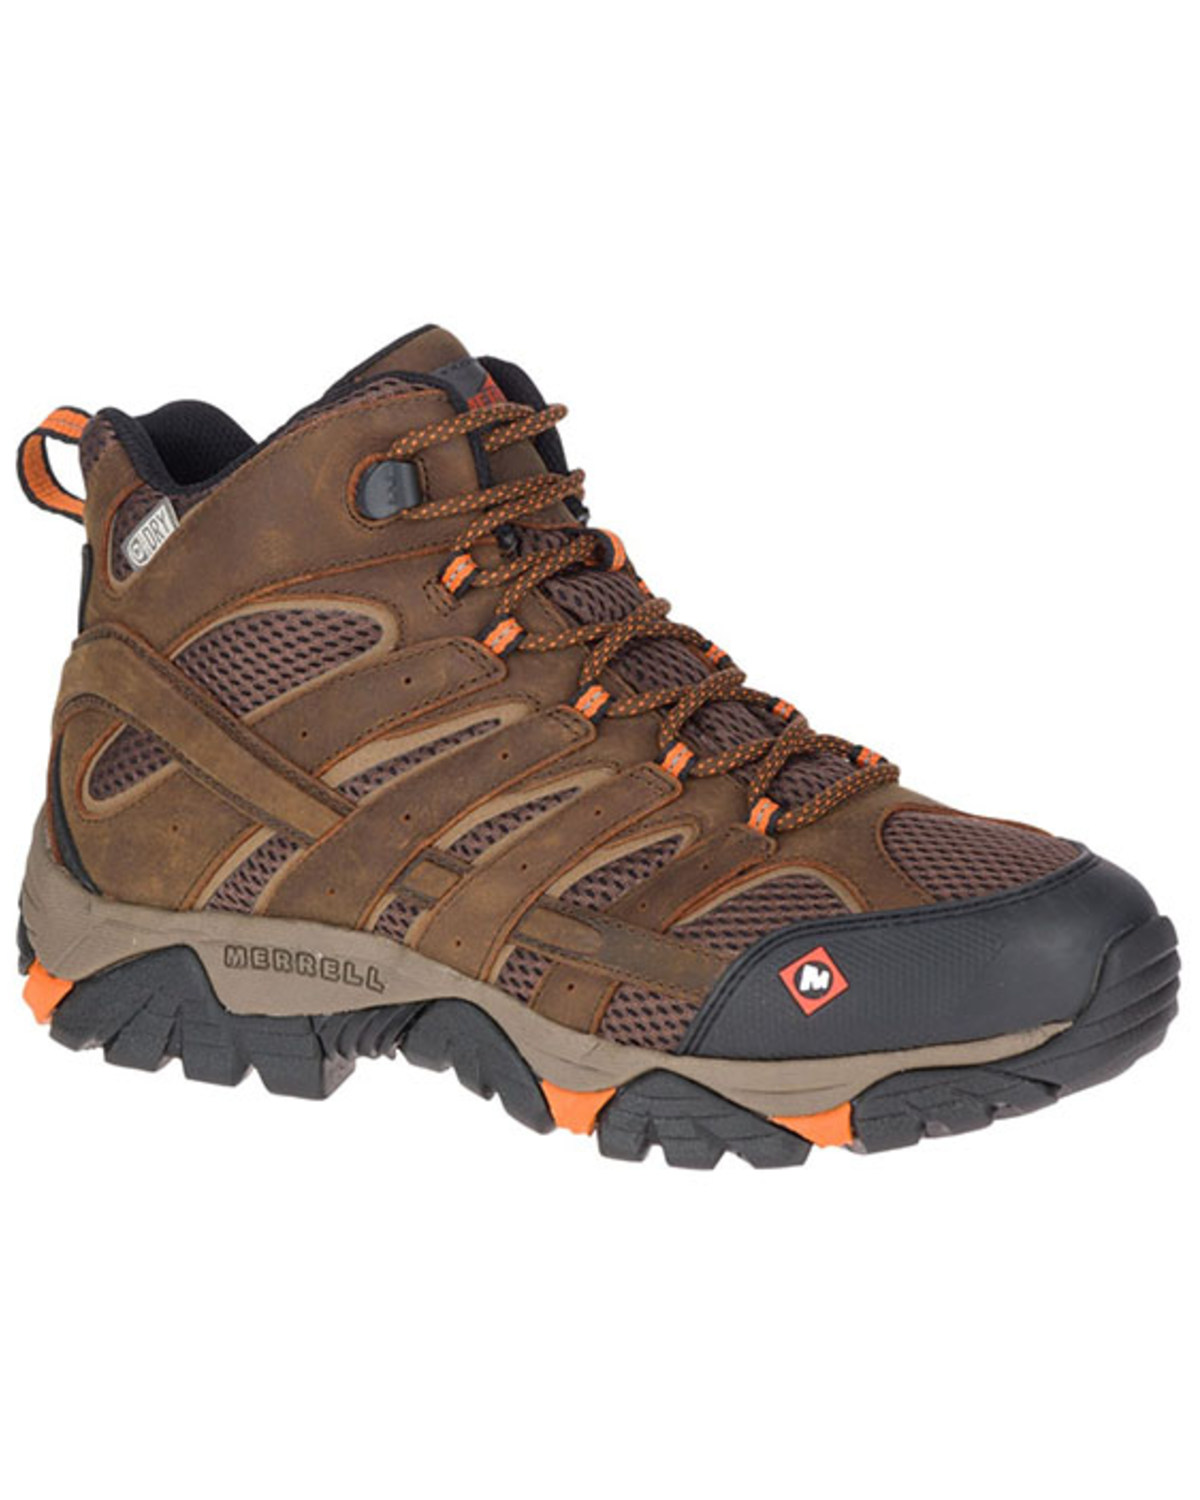 Merrell Men's MOAB Vertex Waterproof Hiking Boots - Soft Toe